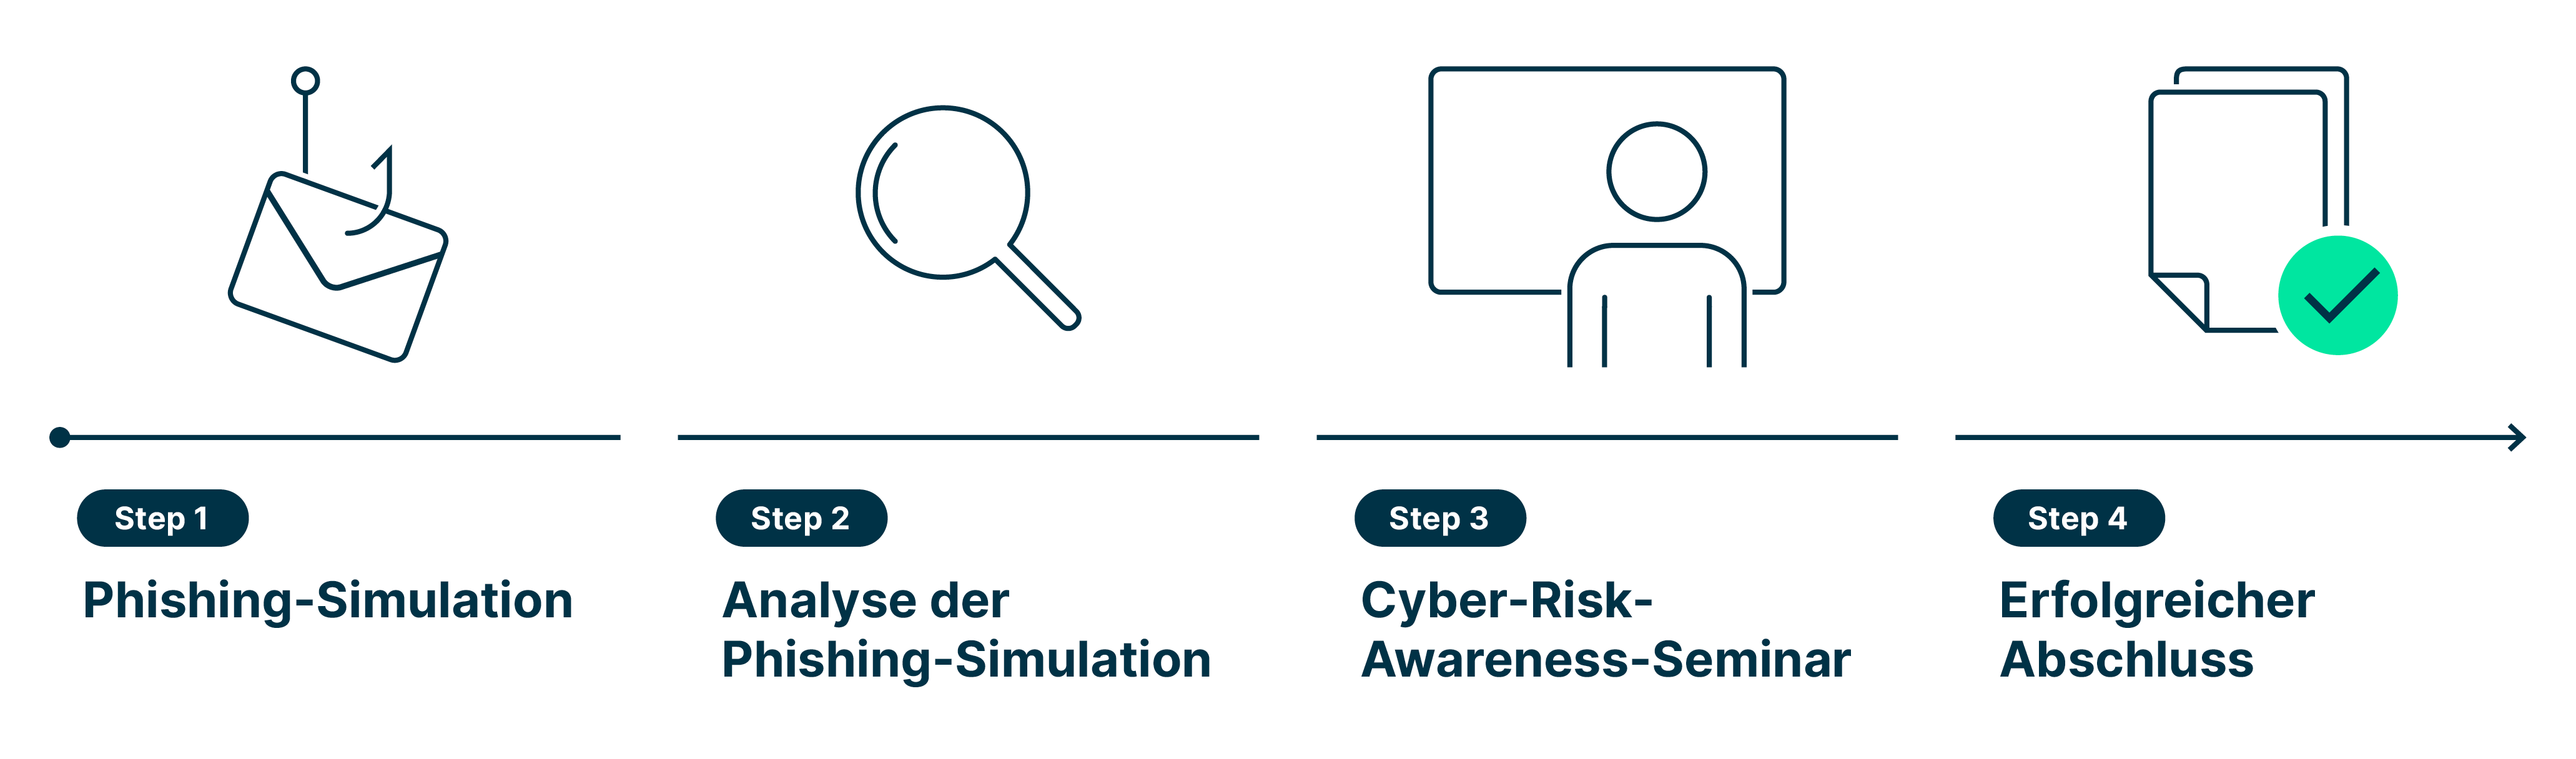 cyber_risk_awareness_training_graphic_de